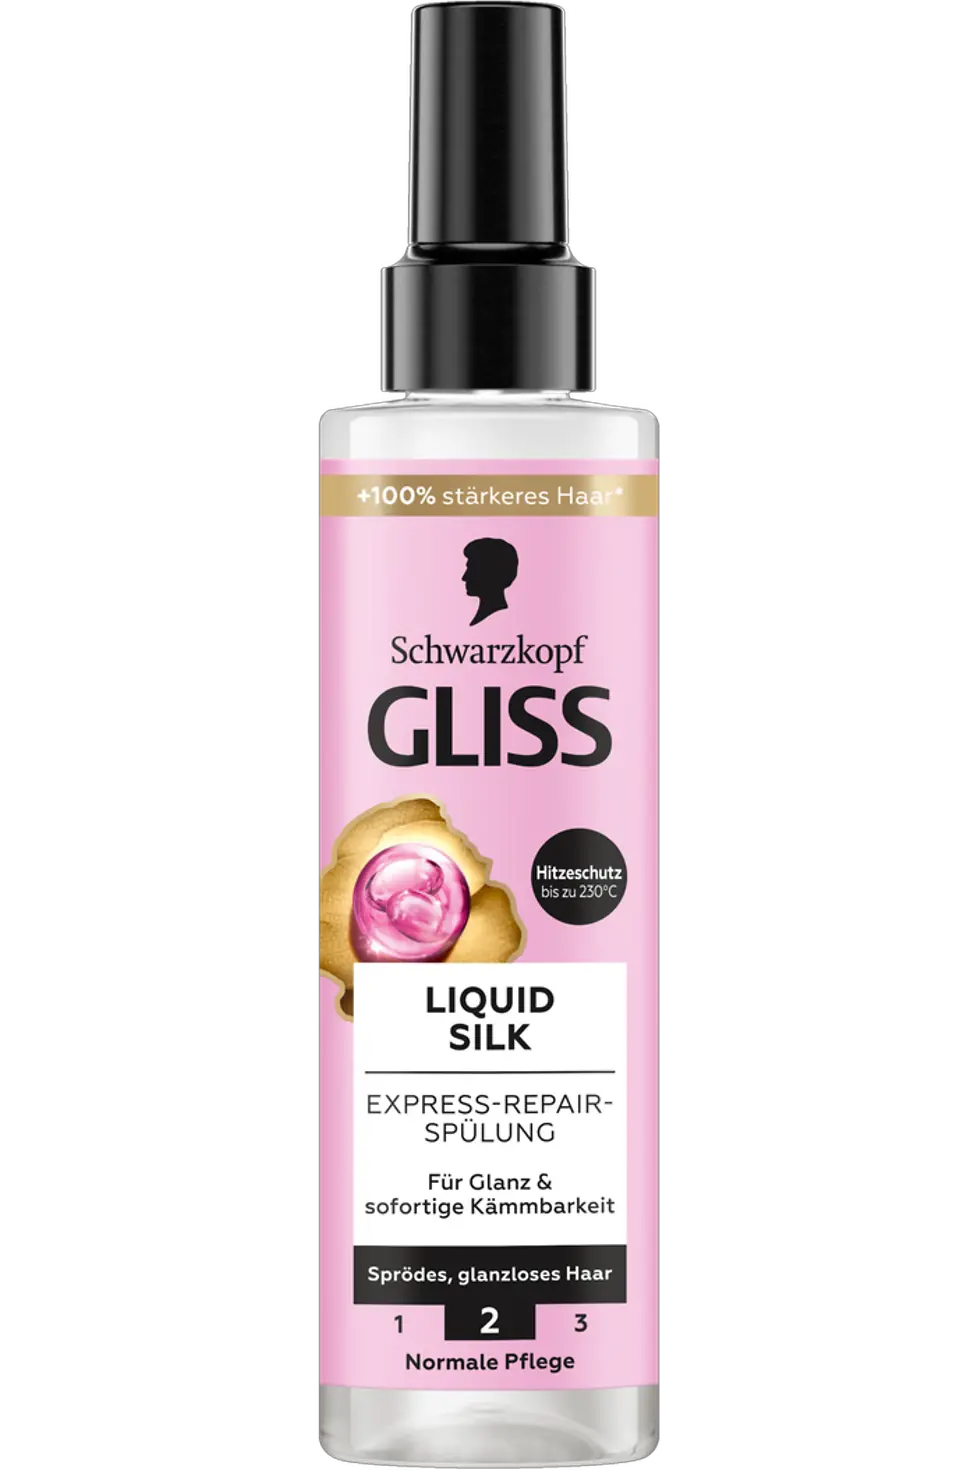 
Gliss Liquid Silk Express-Repair-Spülung